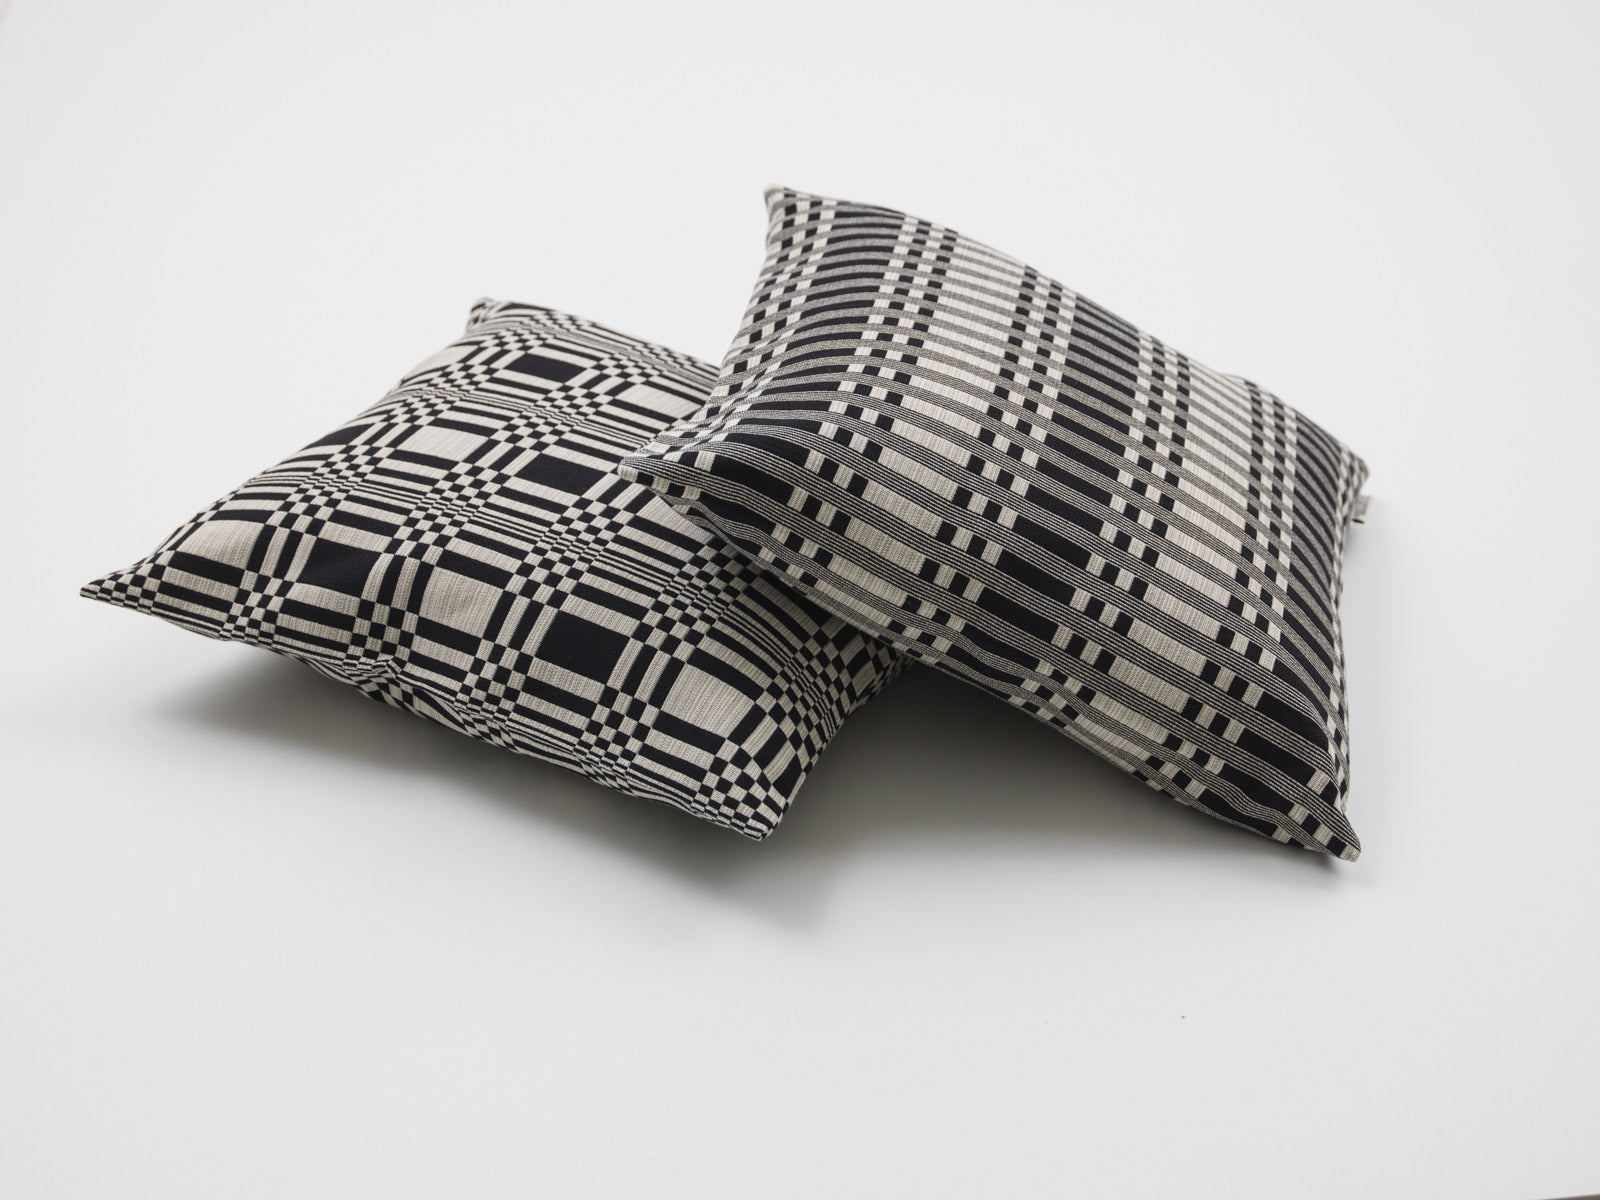 Cushion pillow 40x40 cm (cover only) -Doris, almond